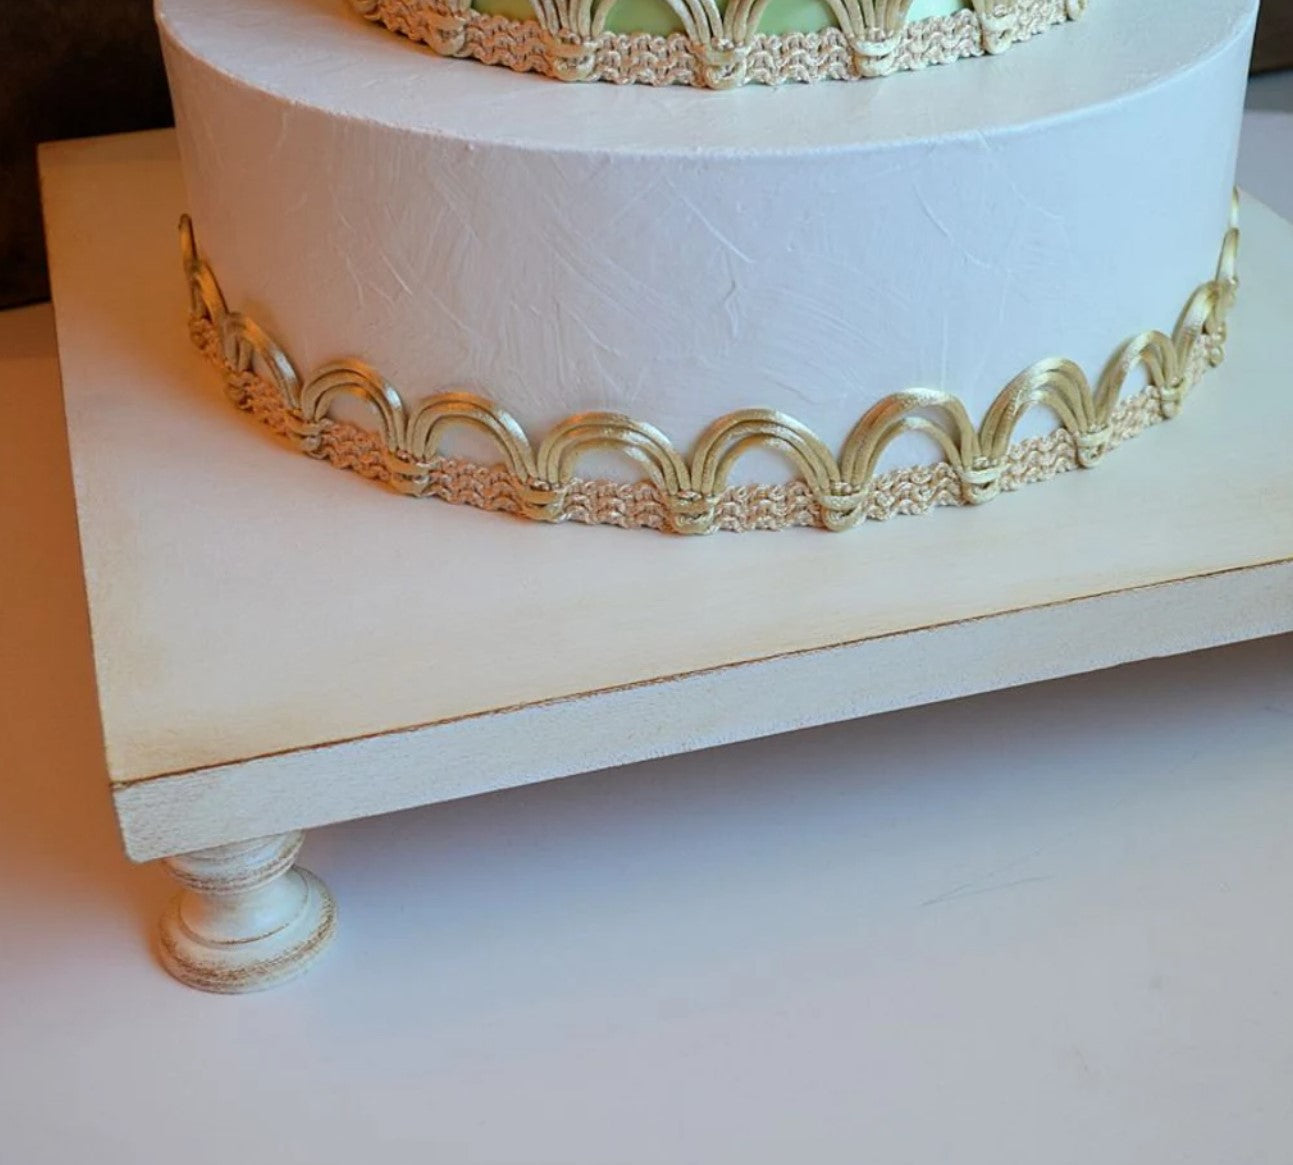 Wedding cake stand / cake pedestal / cupcake stand/ dessert table decor / white rustic cake stand / wedding cakes / 12" square cake display